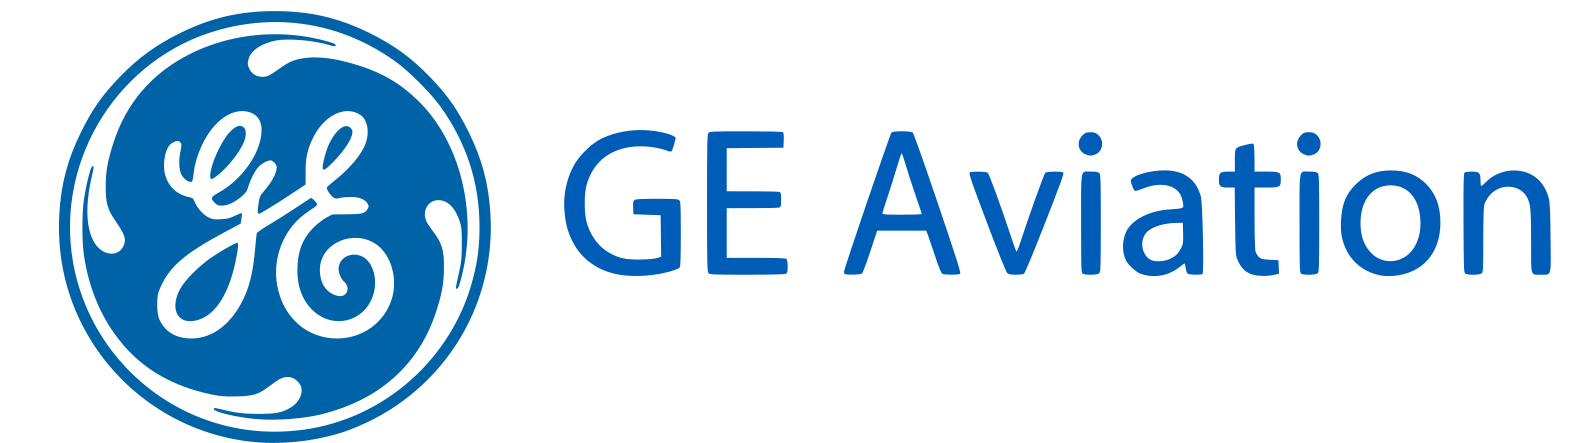 GE_Aviation_logo